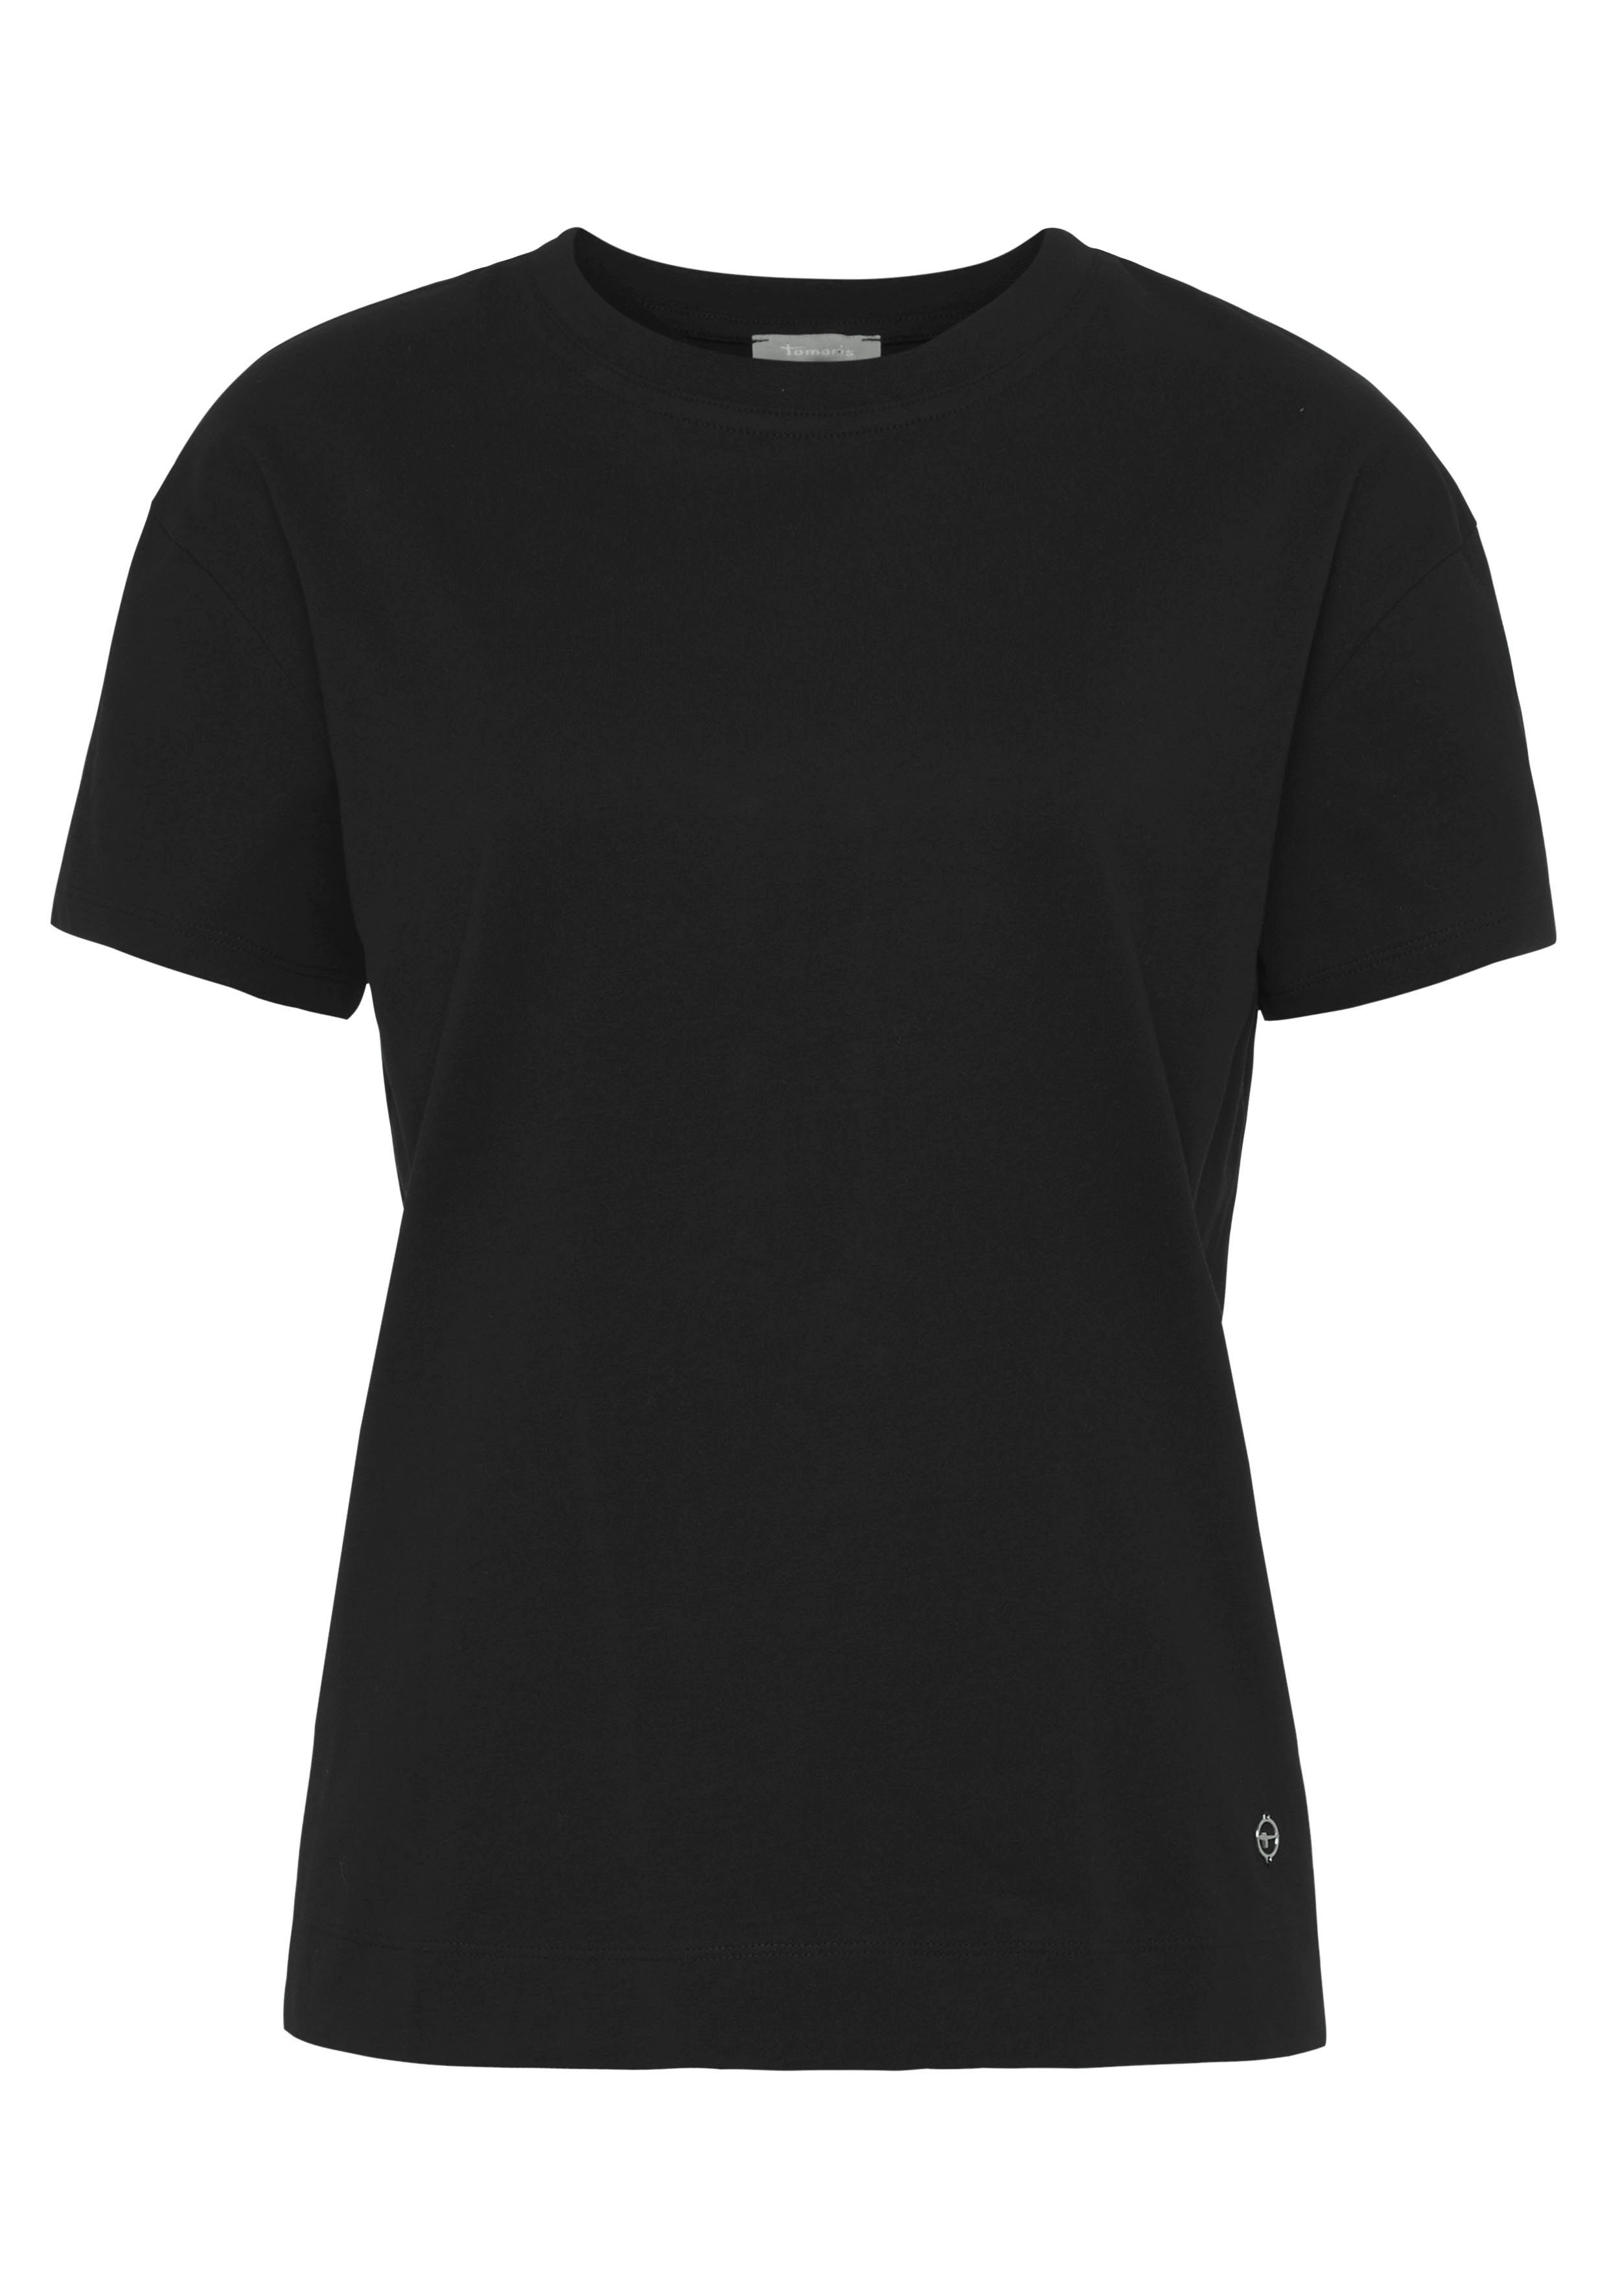 Tamaris Oversized-Look schwarz im T-Shirt